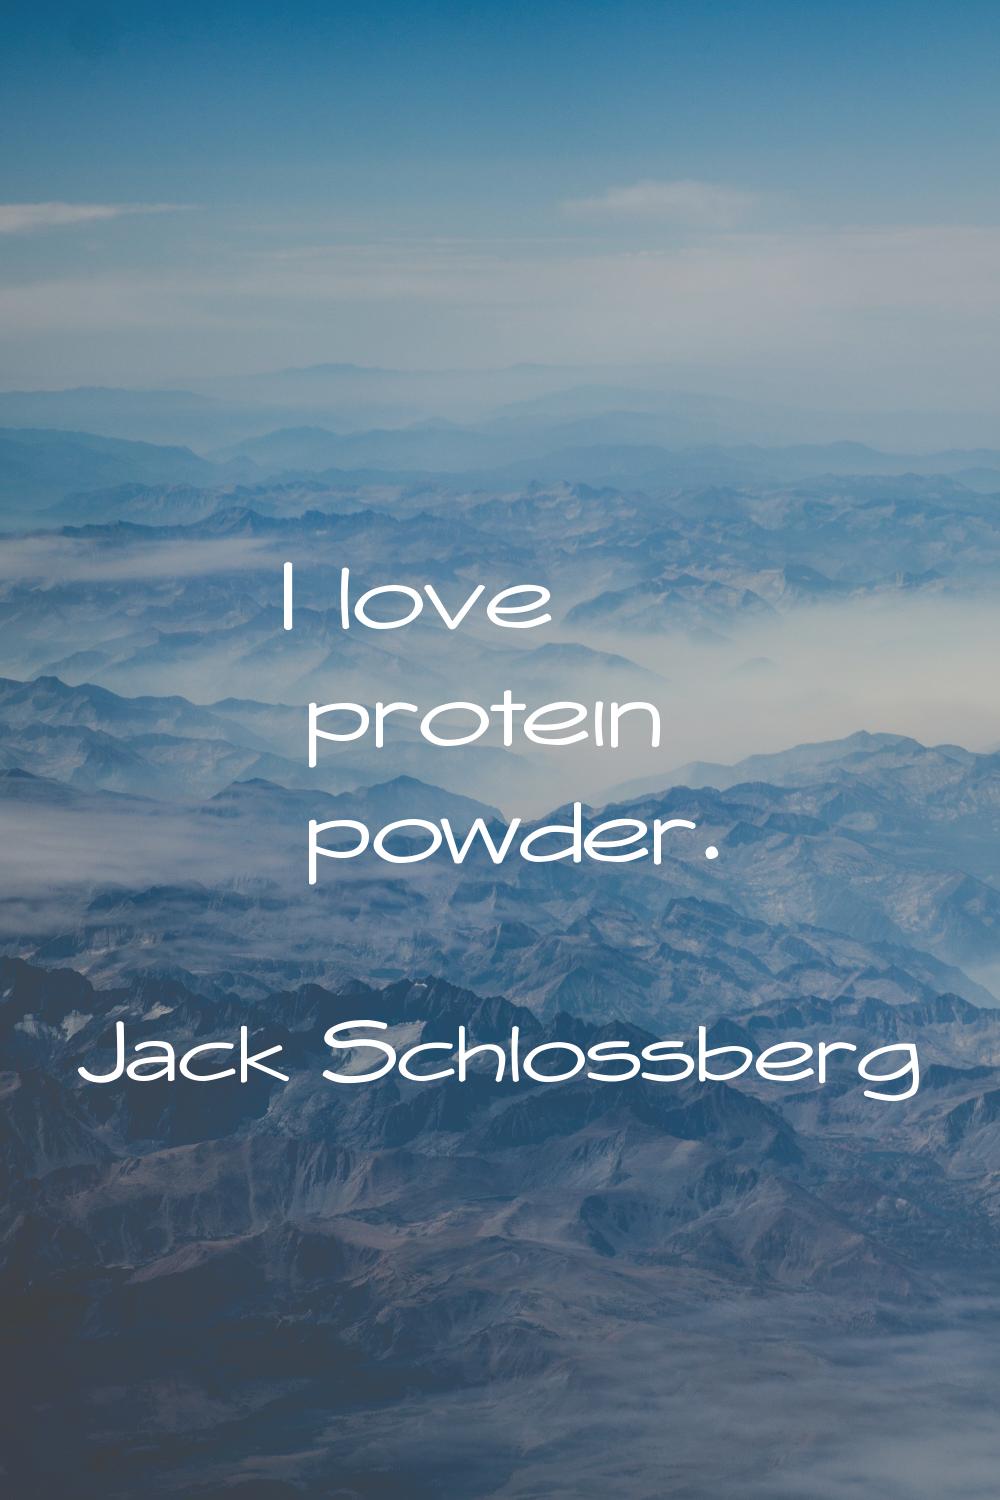 I love protein powder.